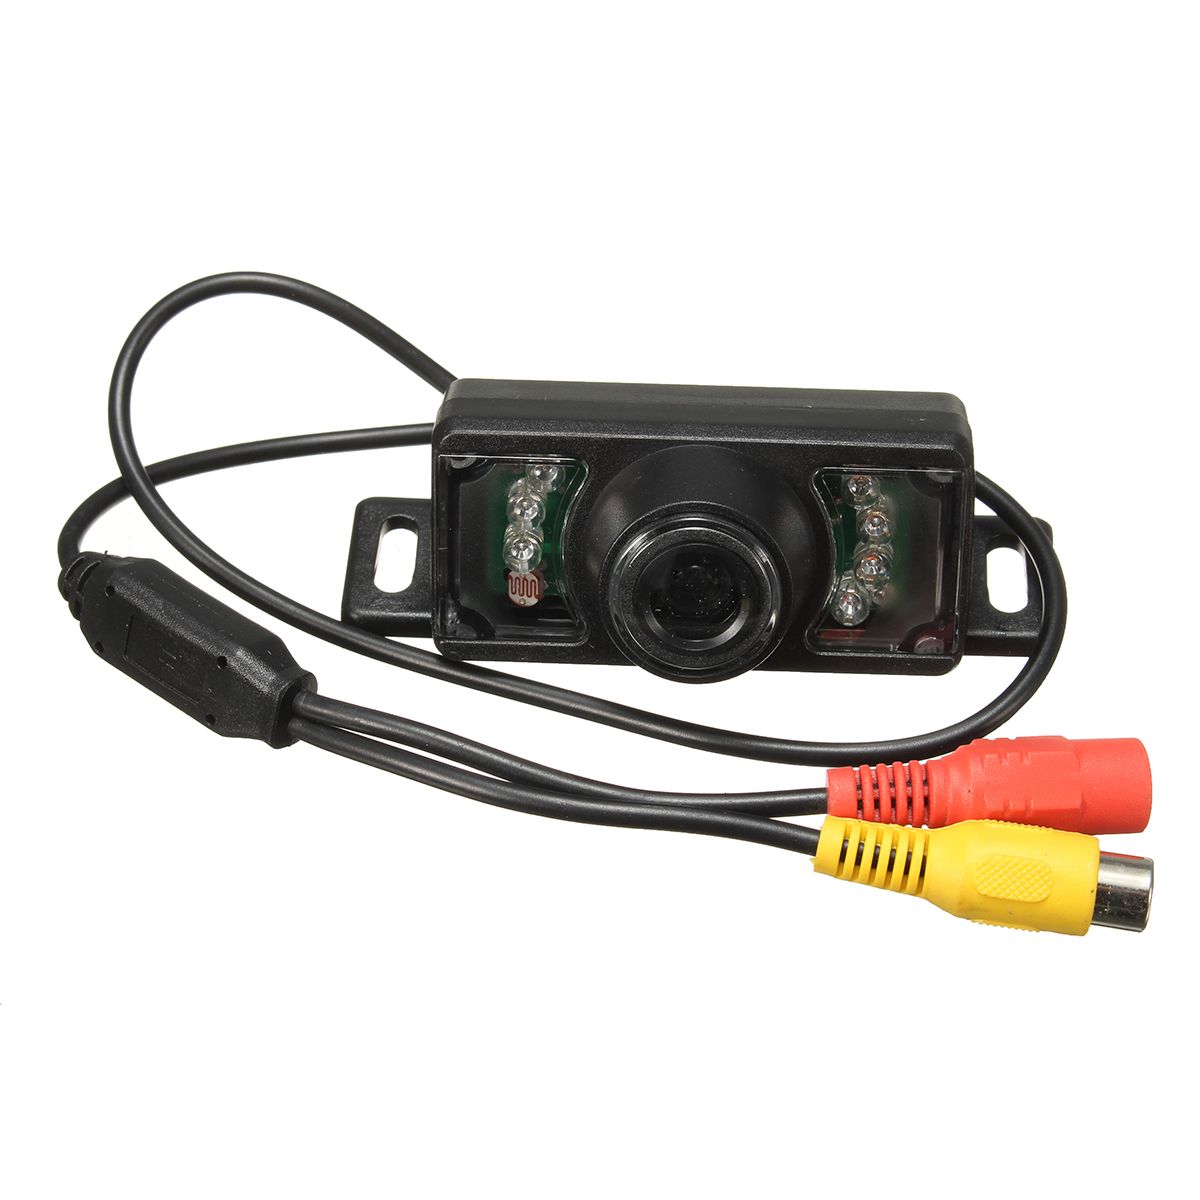 7-Inch-LCD-Mp5-bluetooth-Reversing-Camera-Car-Rear-View-Parking-Mirror-Monitor-1126136